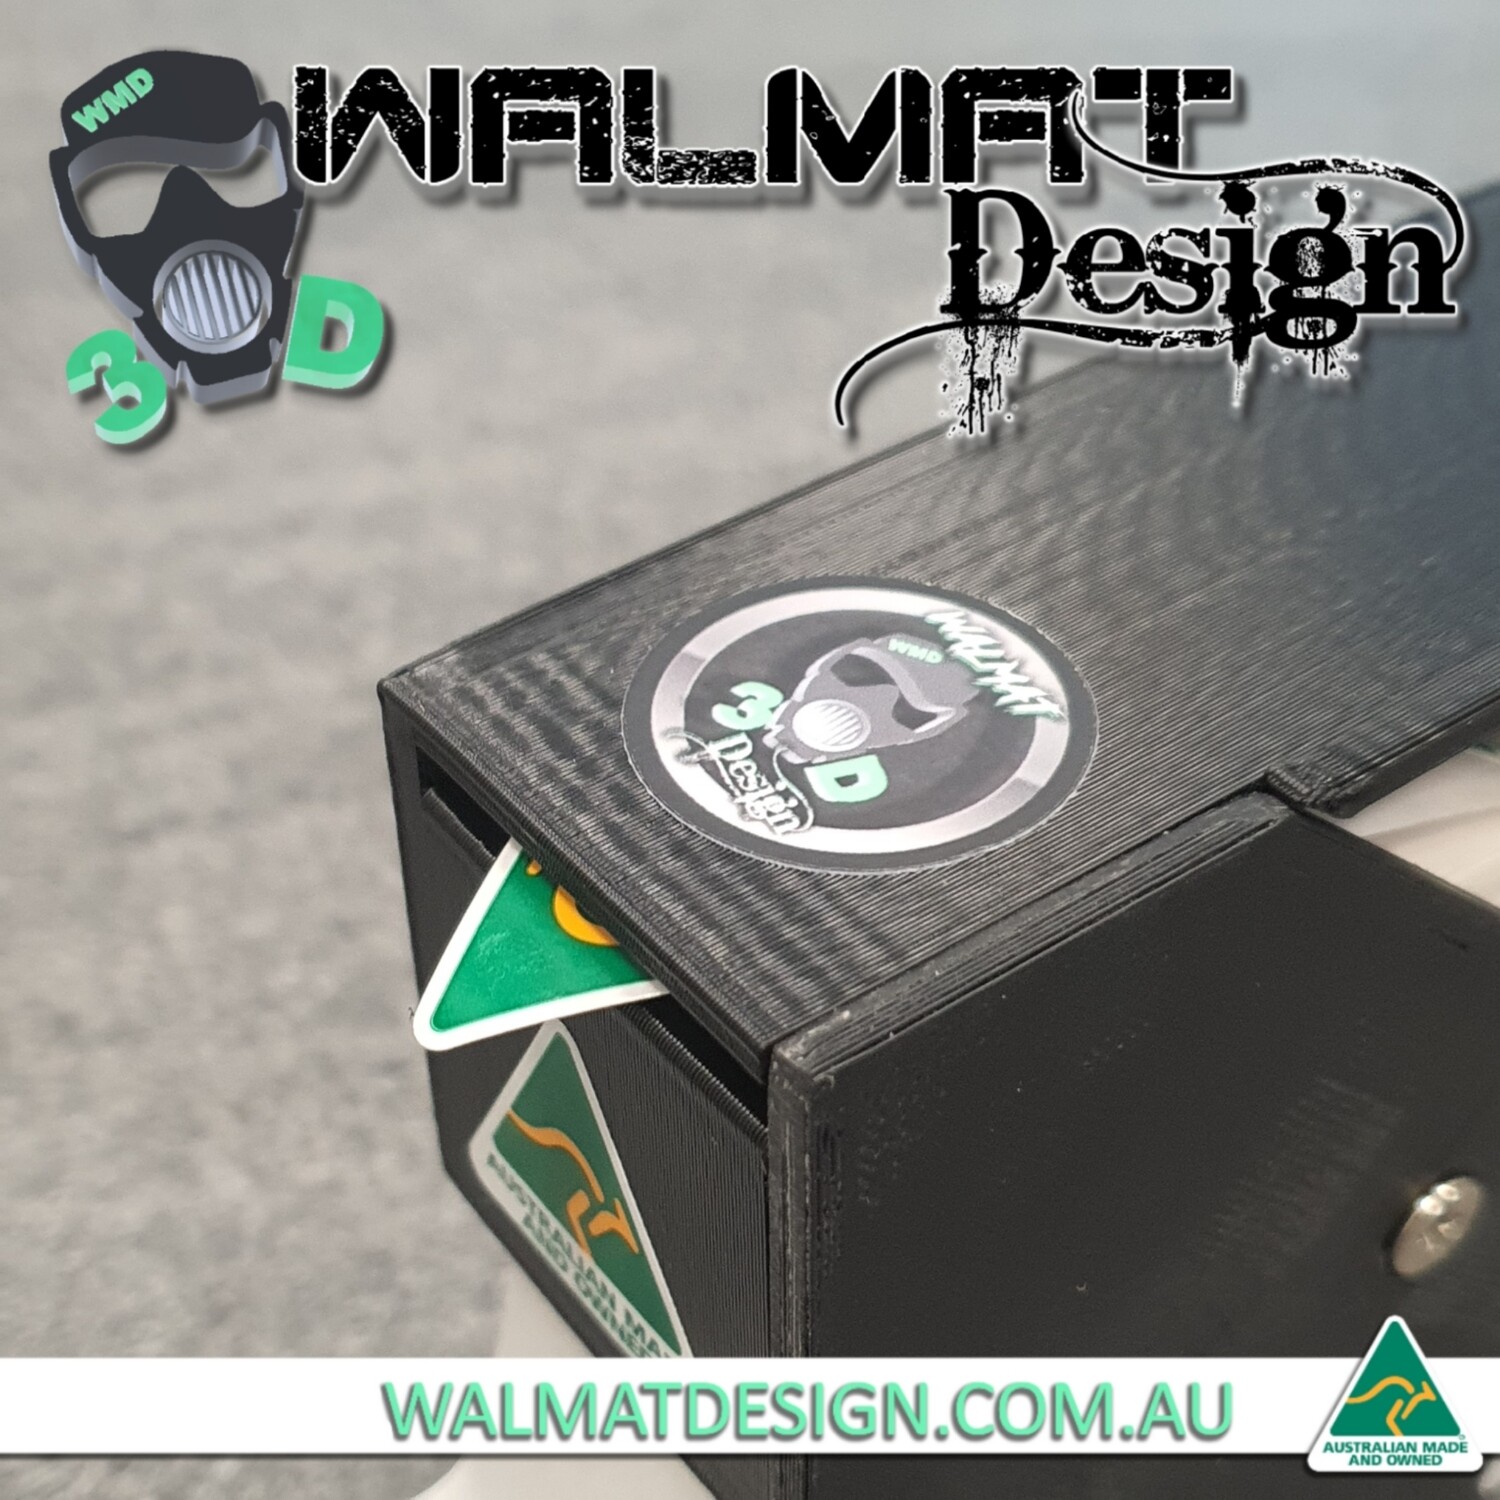 Australian made 23mm sticker roll dispenser - Australian made and owned